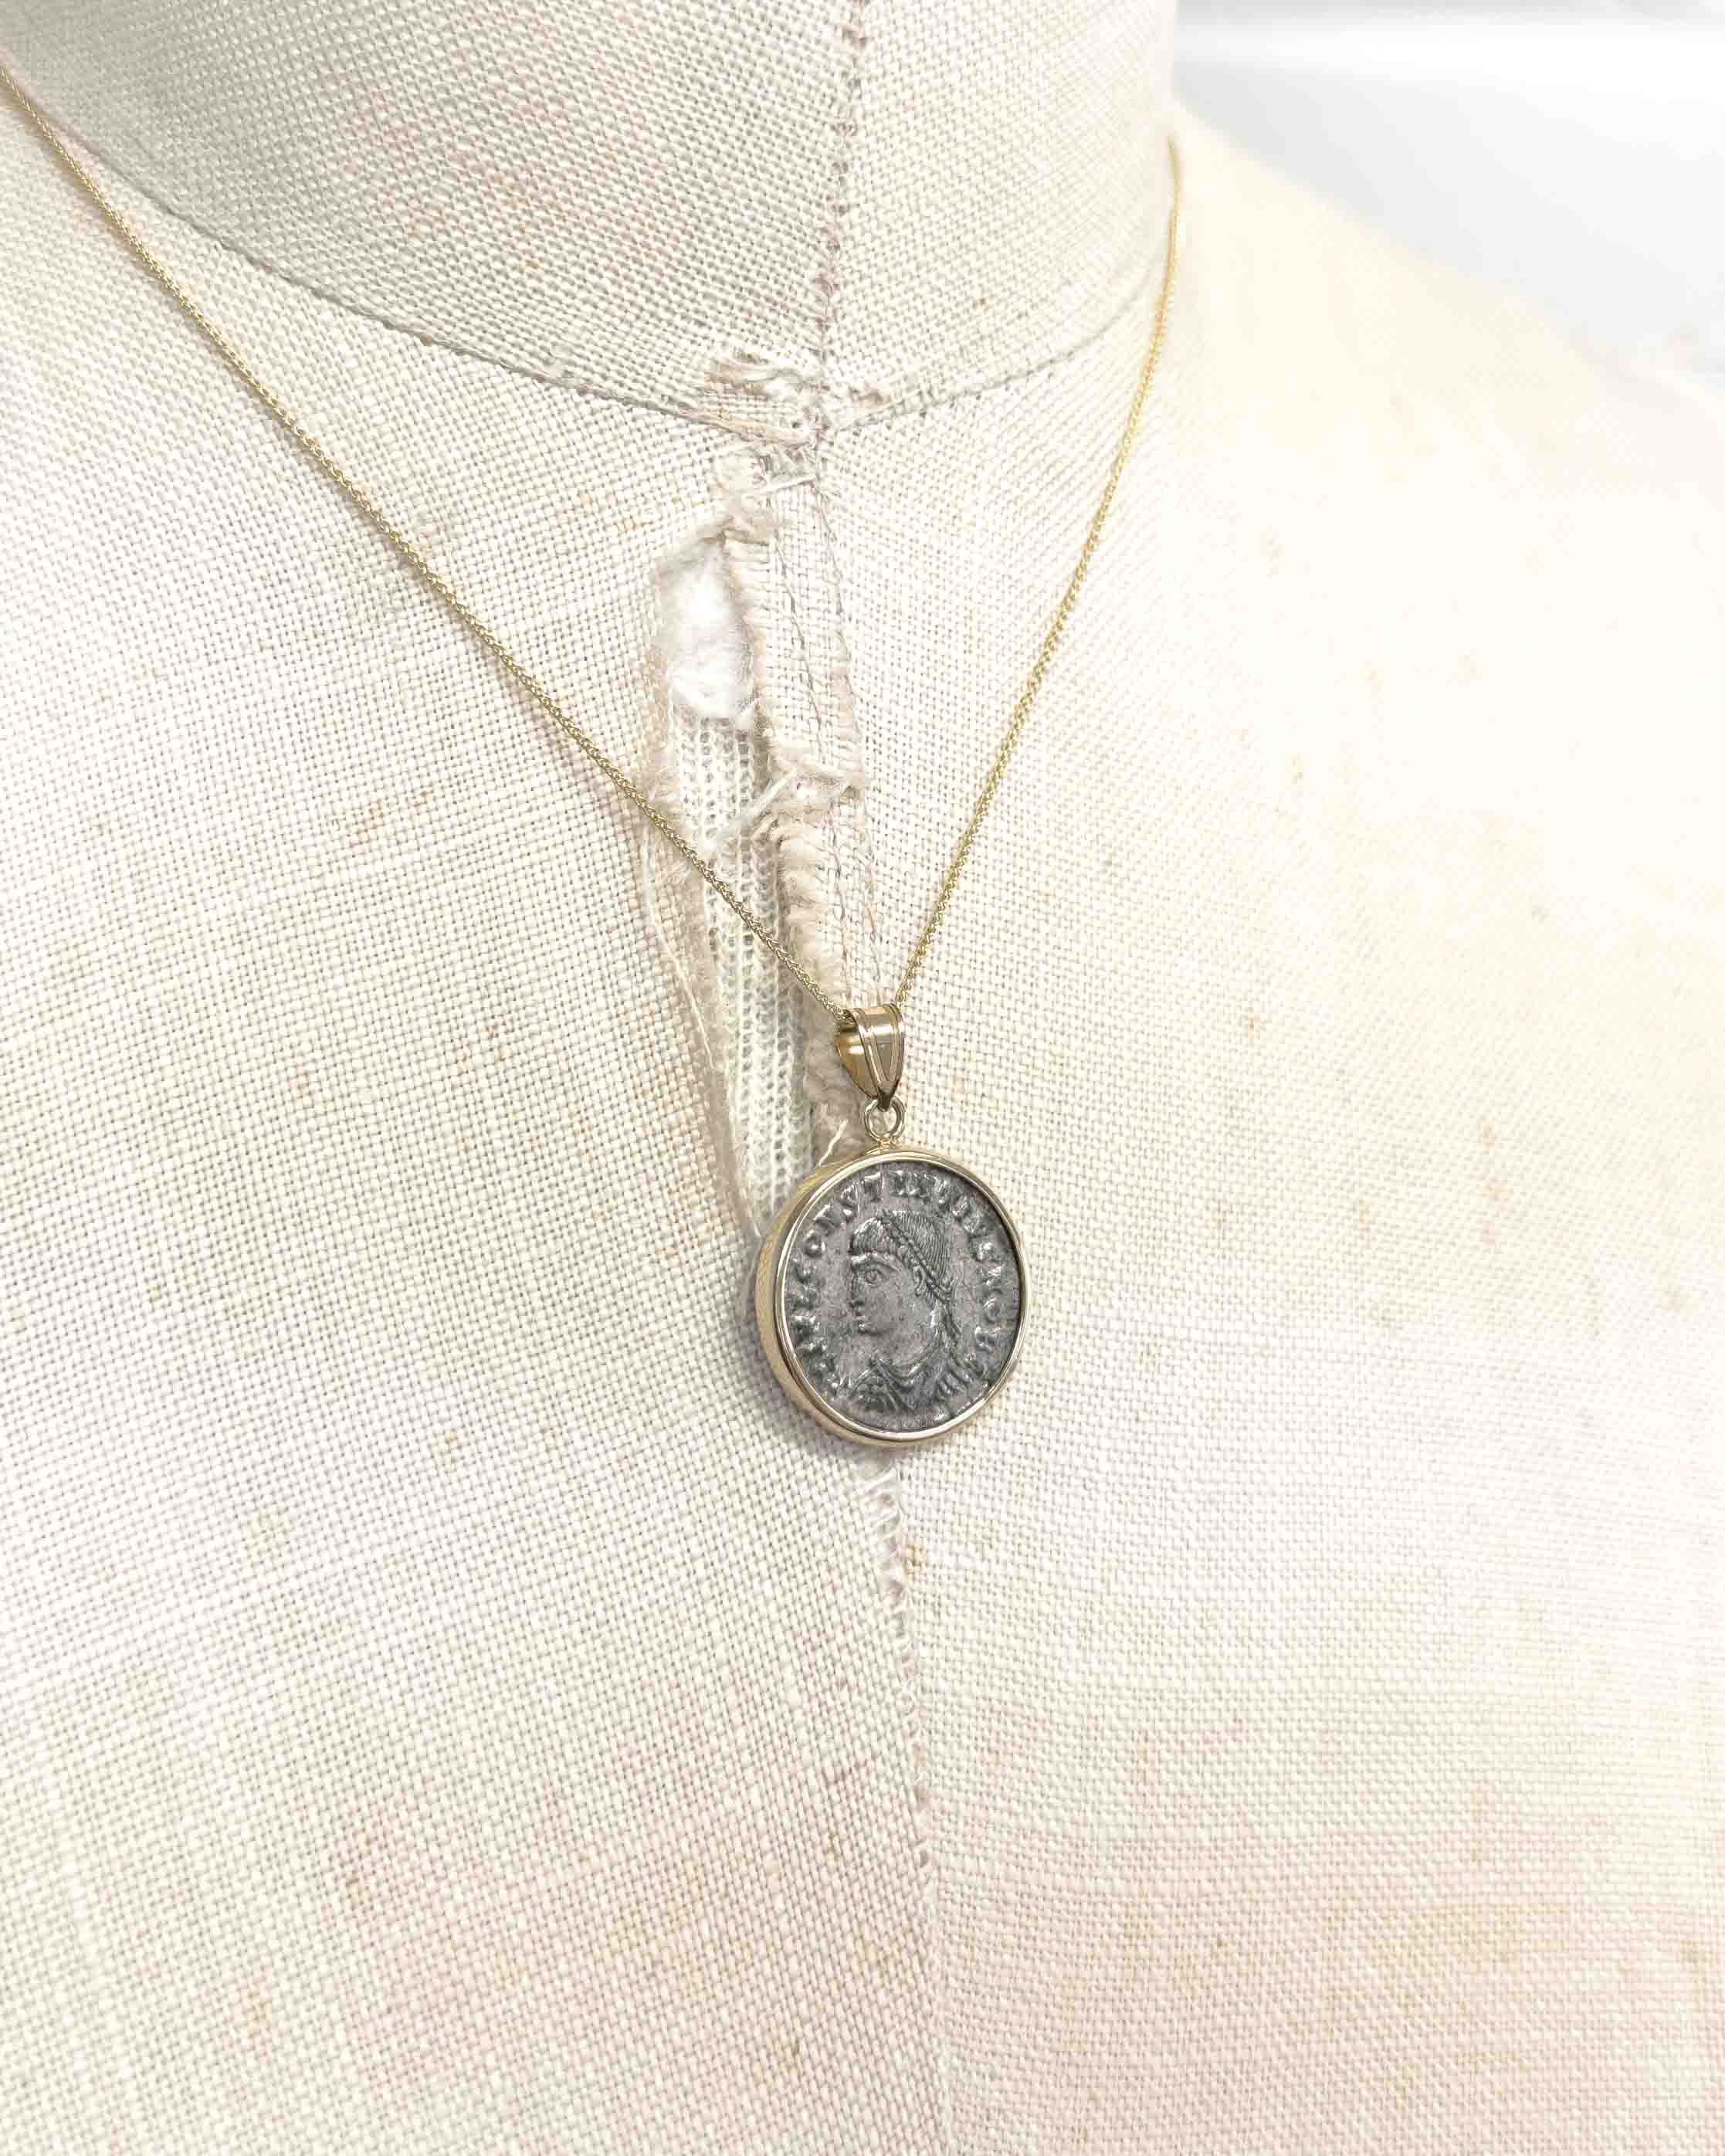 14k Gold Genuine Ancient Roman Coin Necklace (Constantius II; 324-337 A.D.)